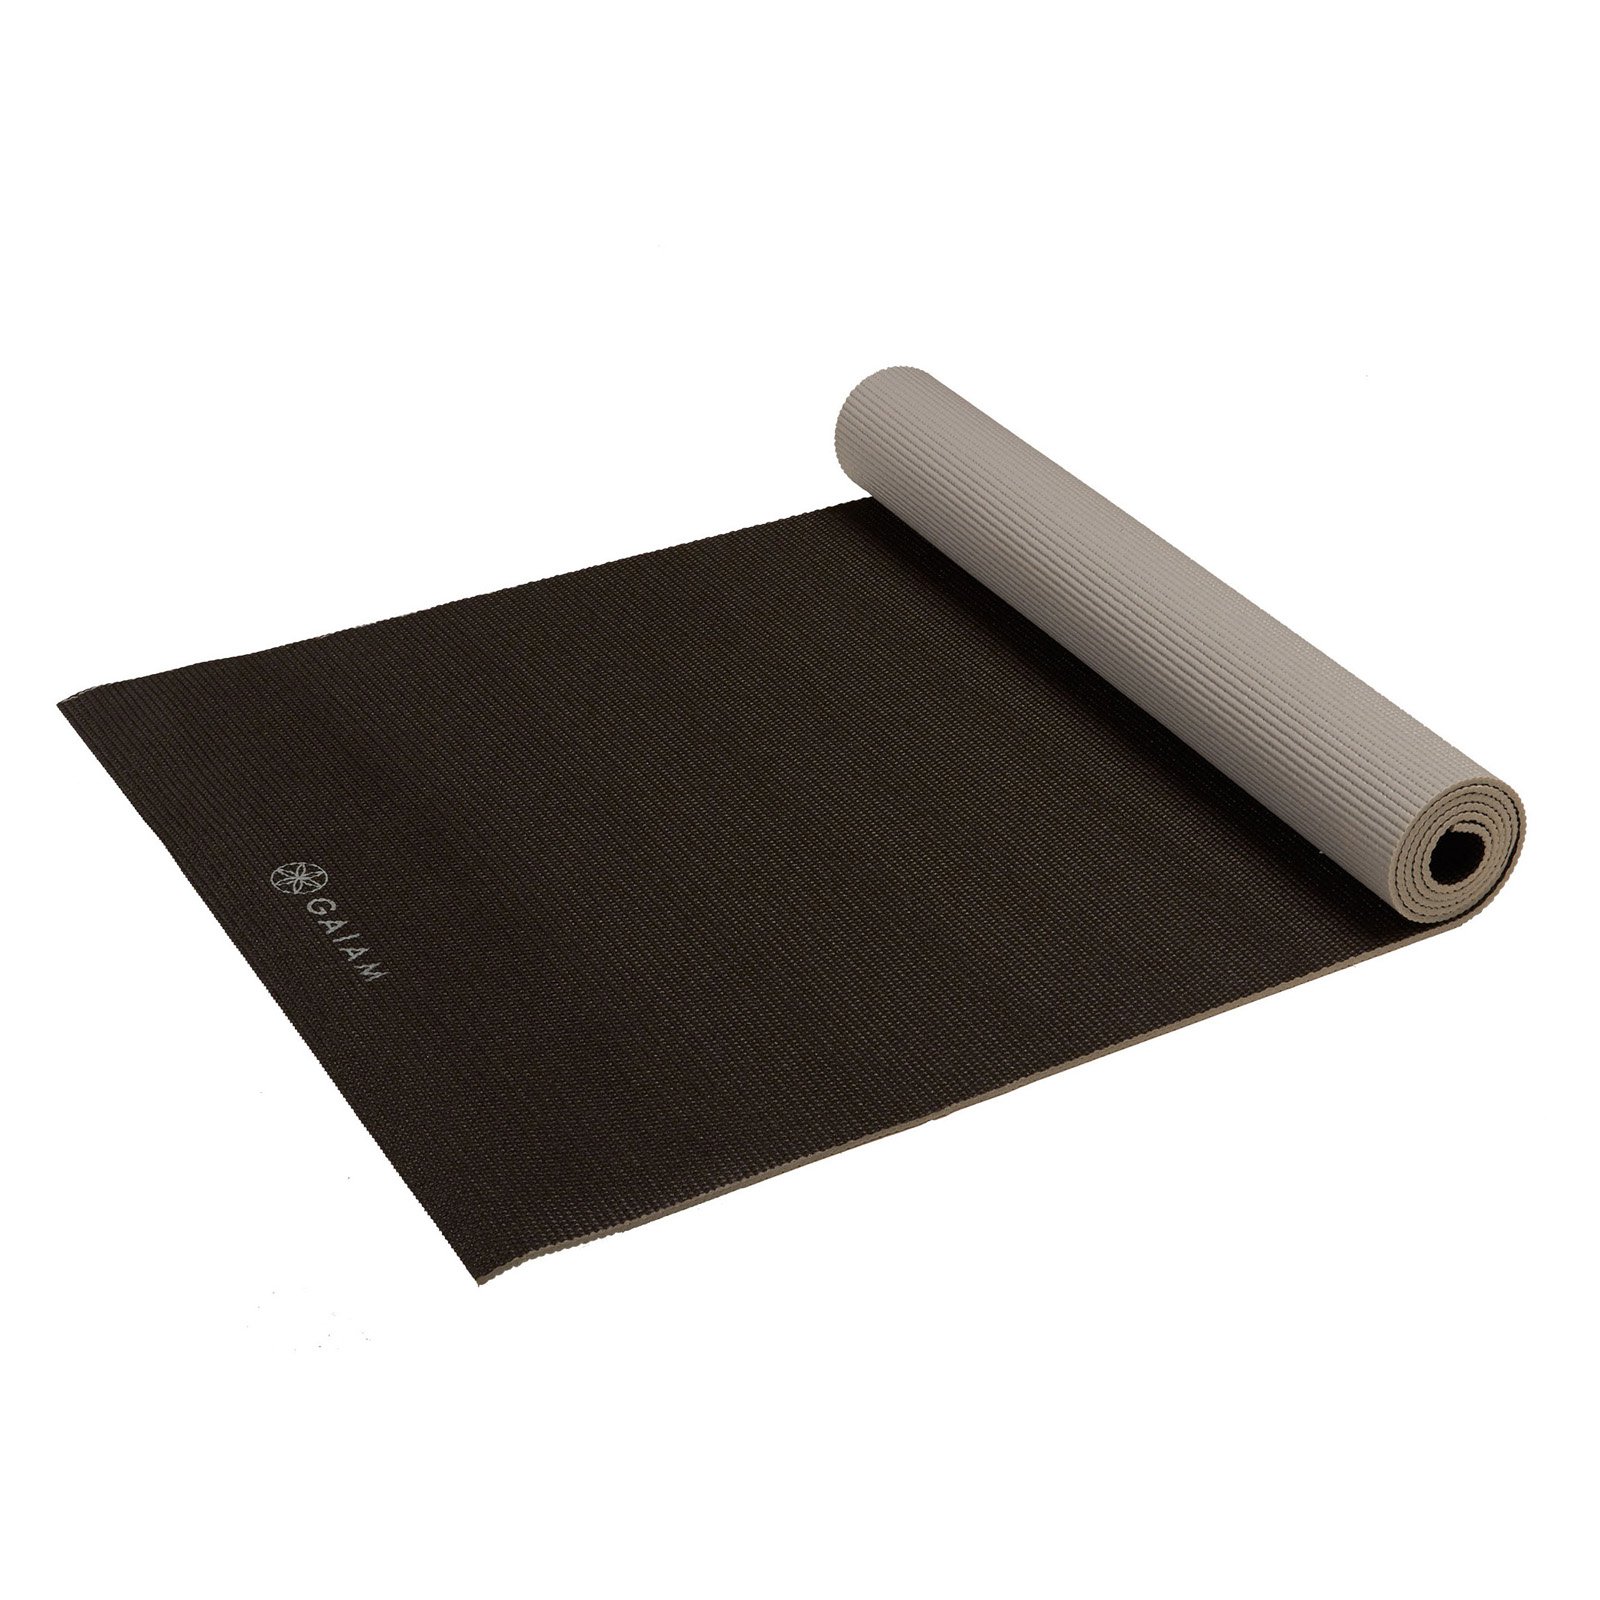 Gaiam Premium 2-Color Yoga Mat, Granite Storm, 5mm - image 4 of 7